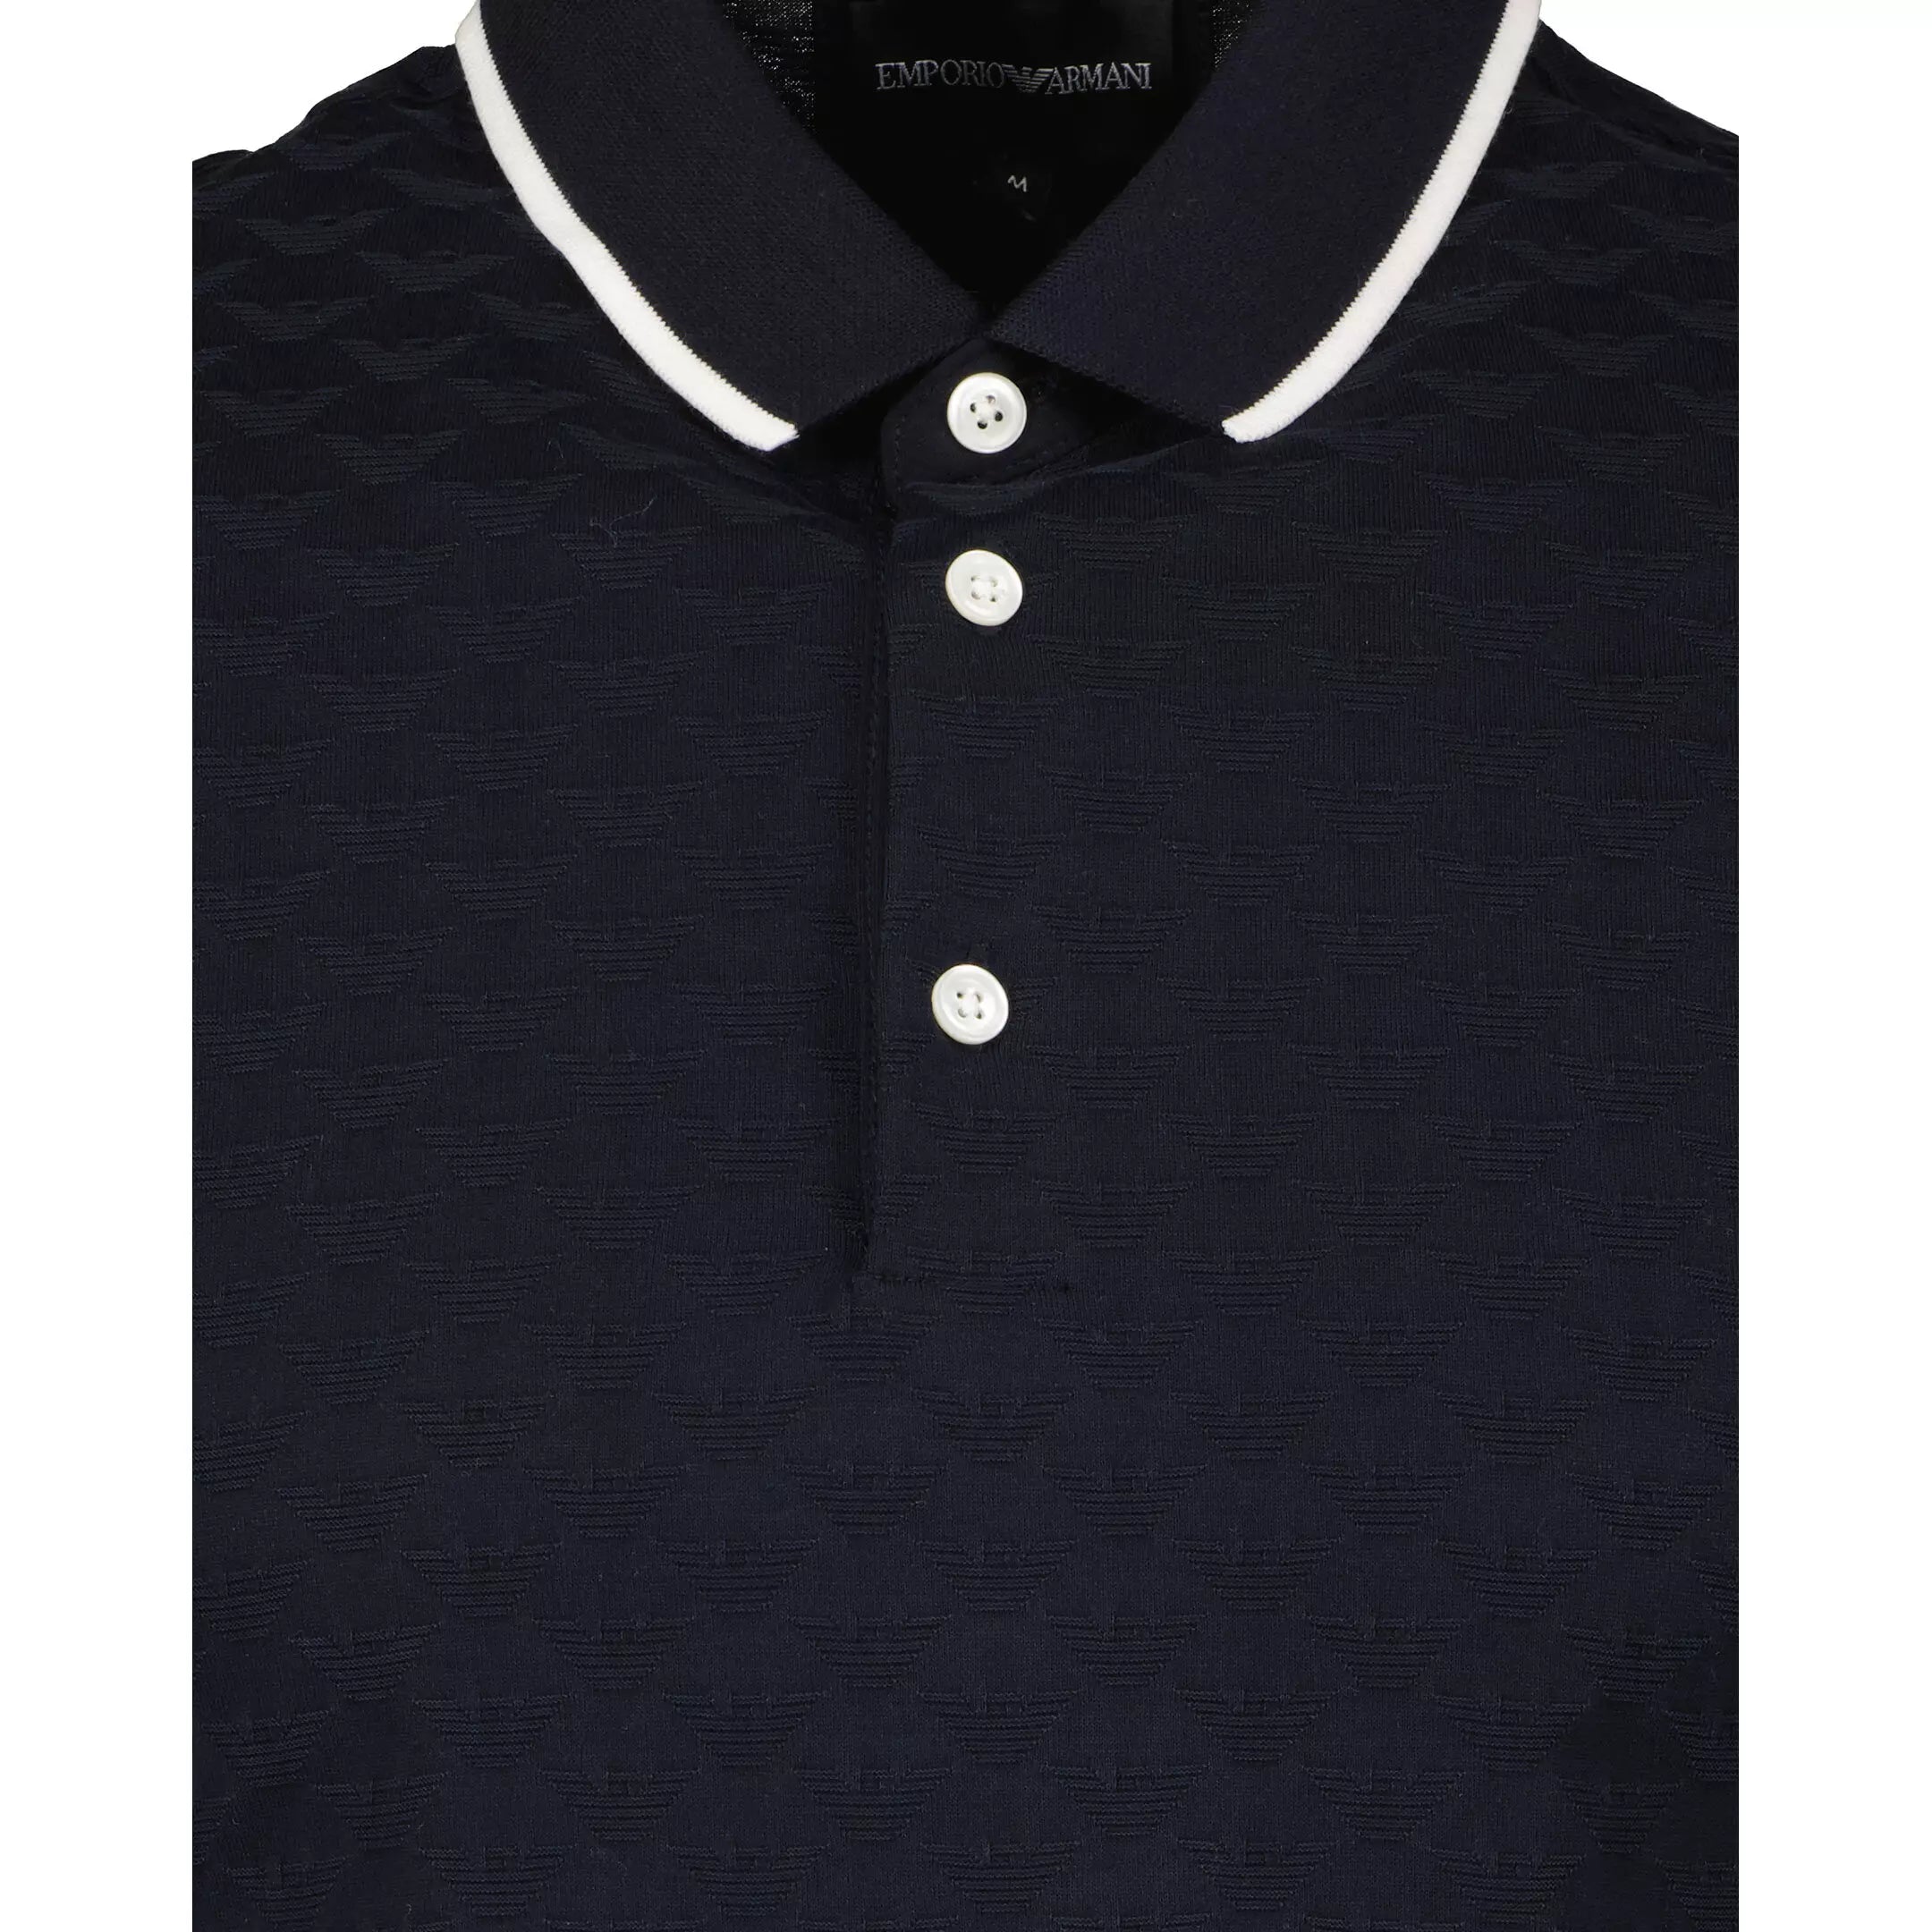 Emporioo Armani Polo Shirt